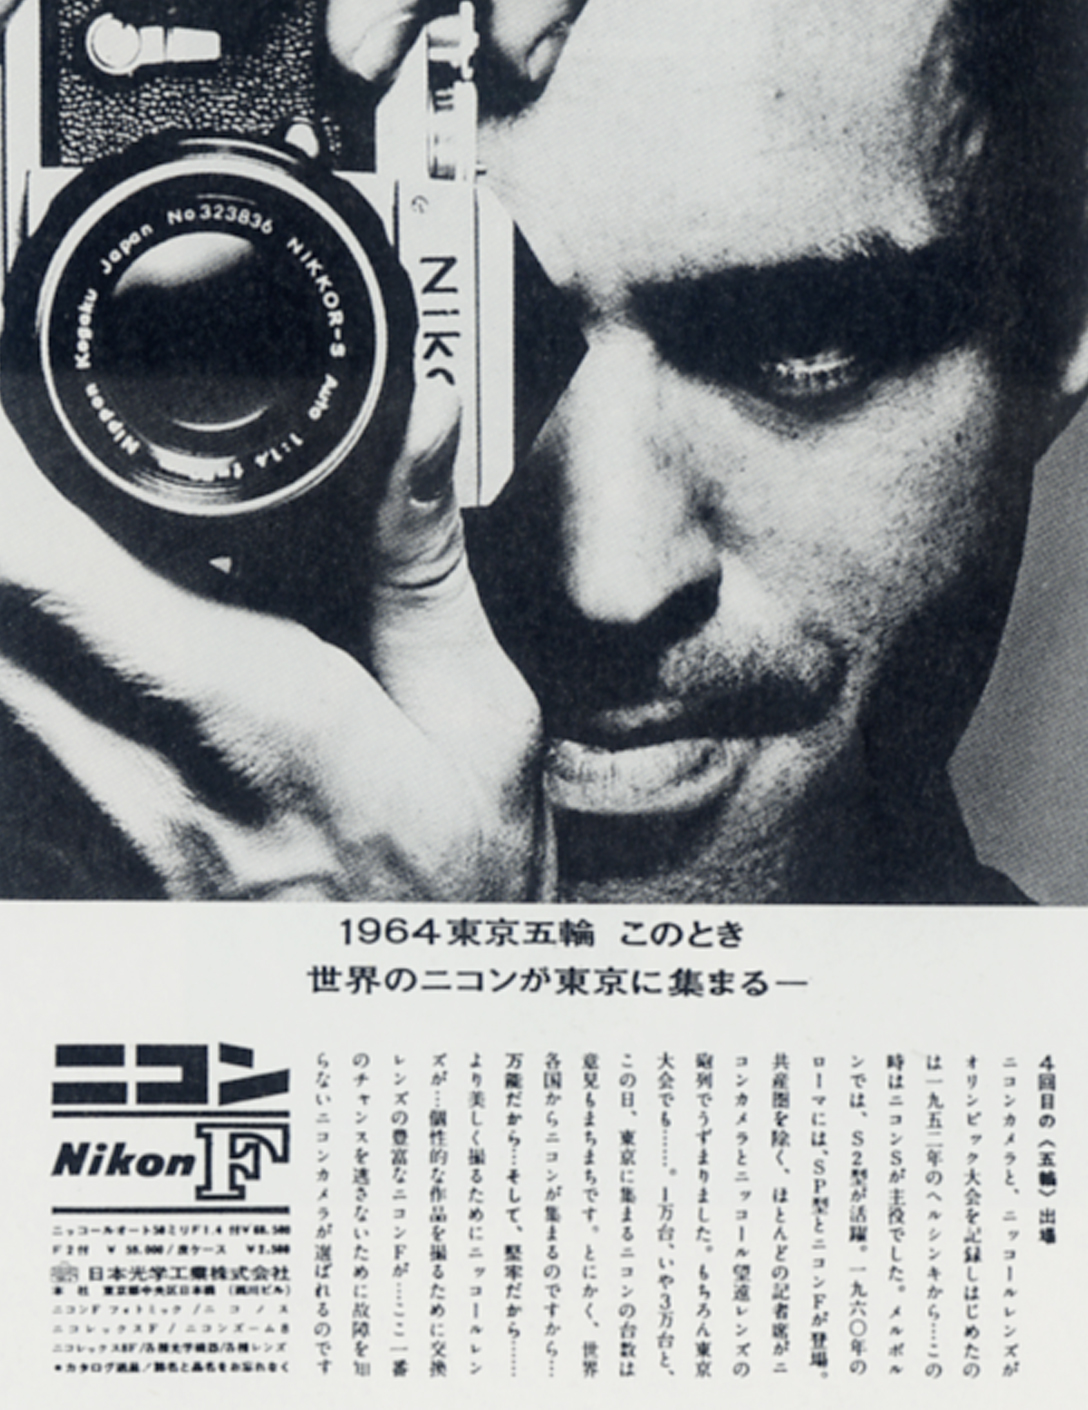 Nikon (Japan Optical Industries) “1964 Tokyo Olympics –The world’s Nikons come to Tokyo”